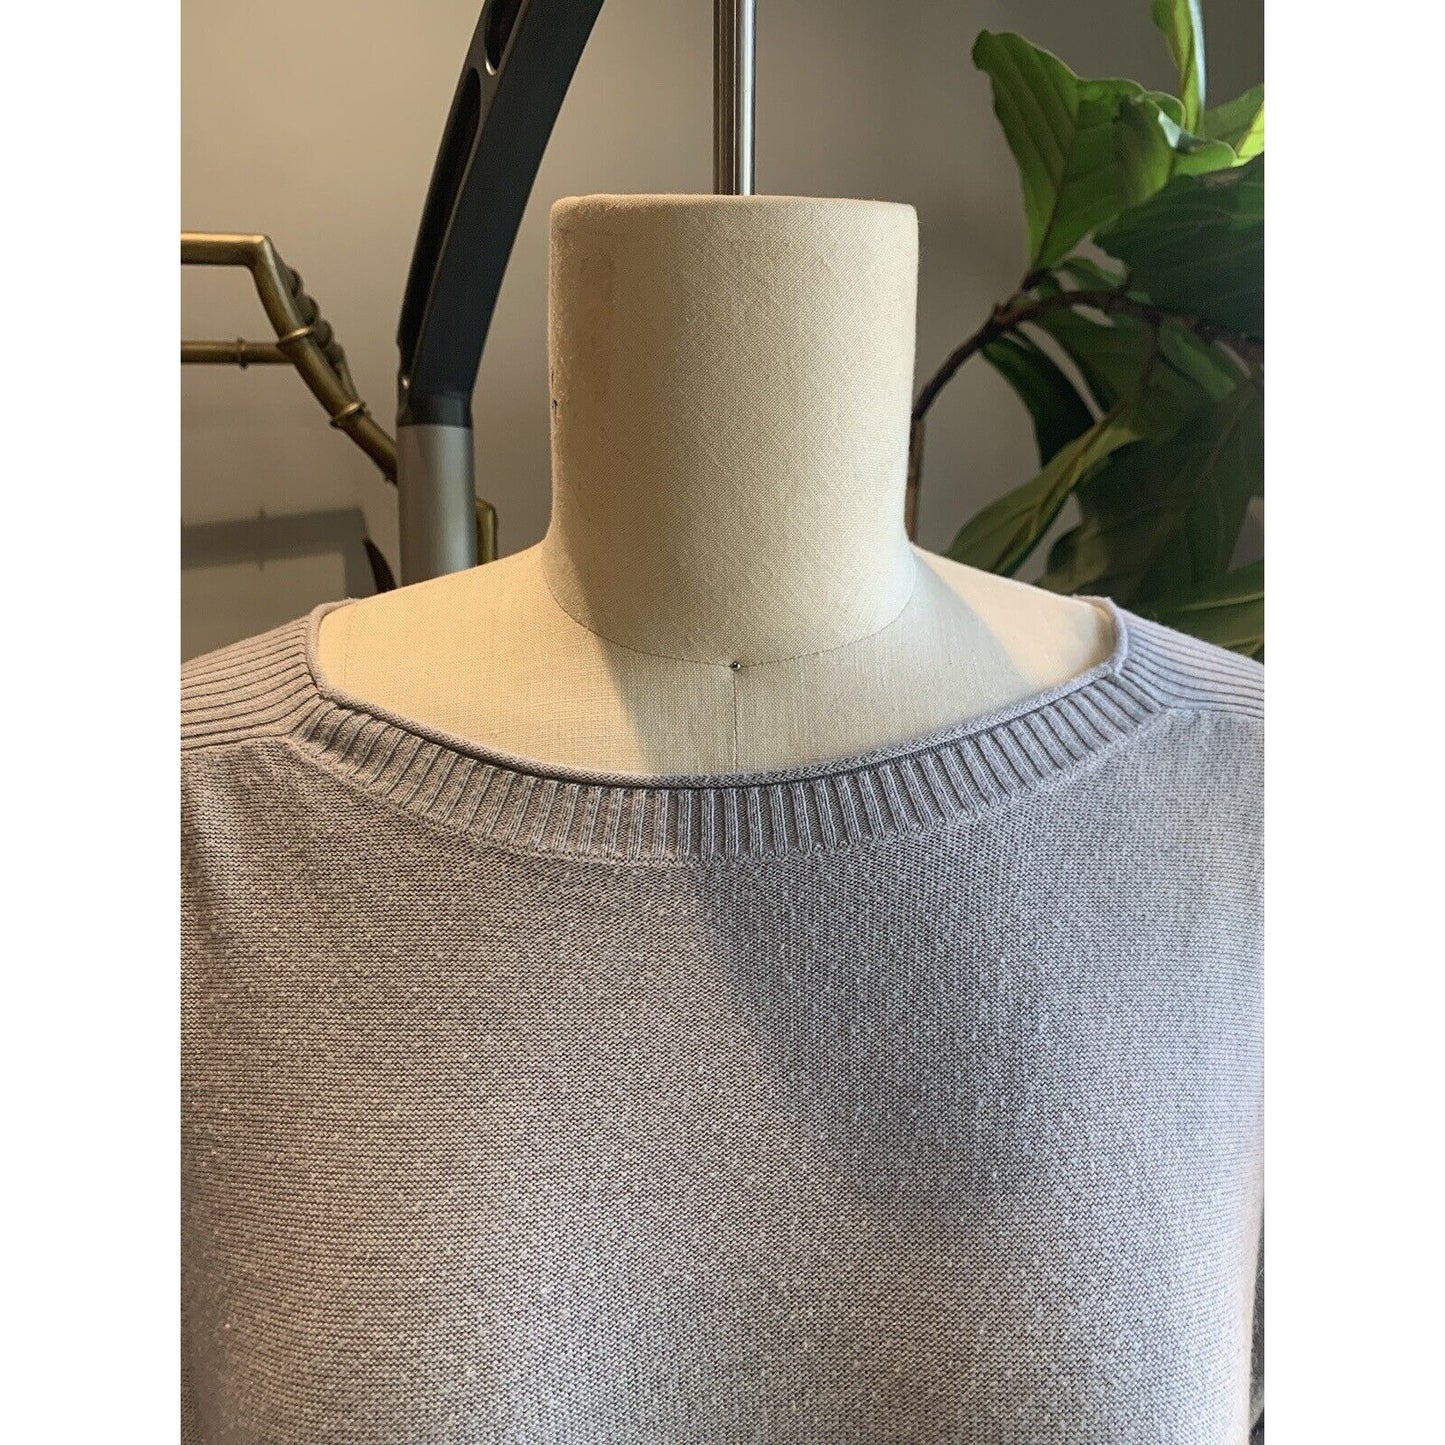 Closeup Of Neckline Of Women's Knit Tunic Sweater